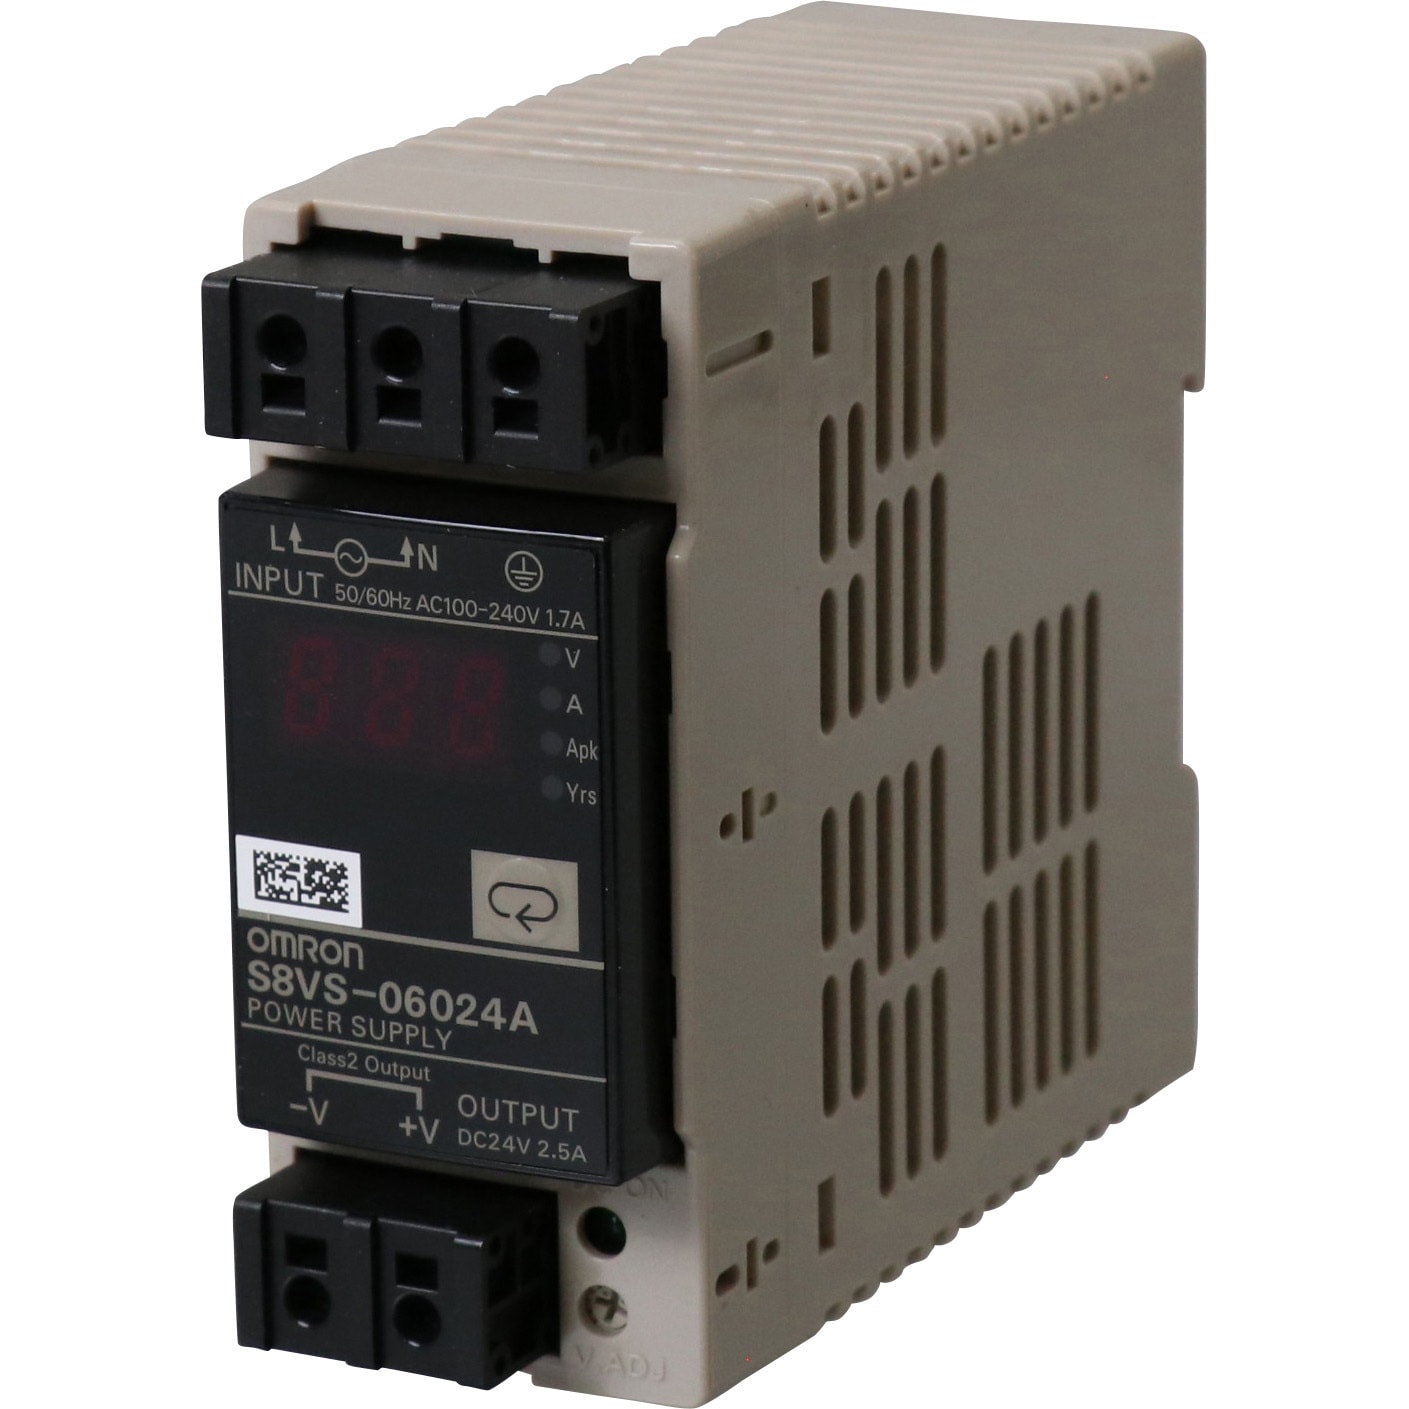 OMRON(オムロン) スイッチング パワーサプライ S8VSタイプ S8VS-48024 - 1